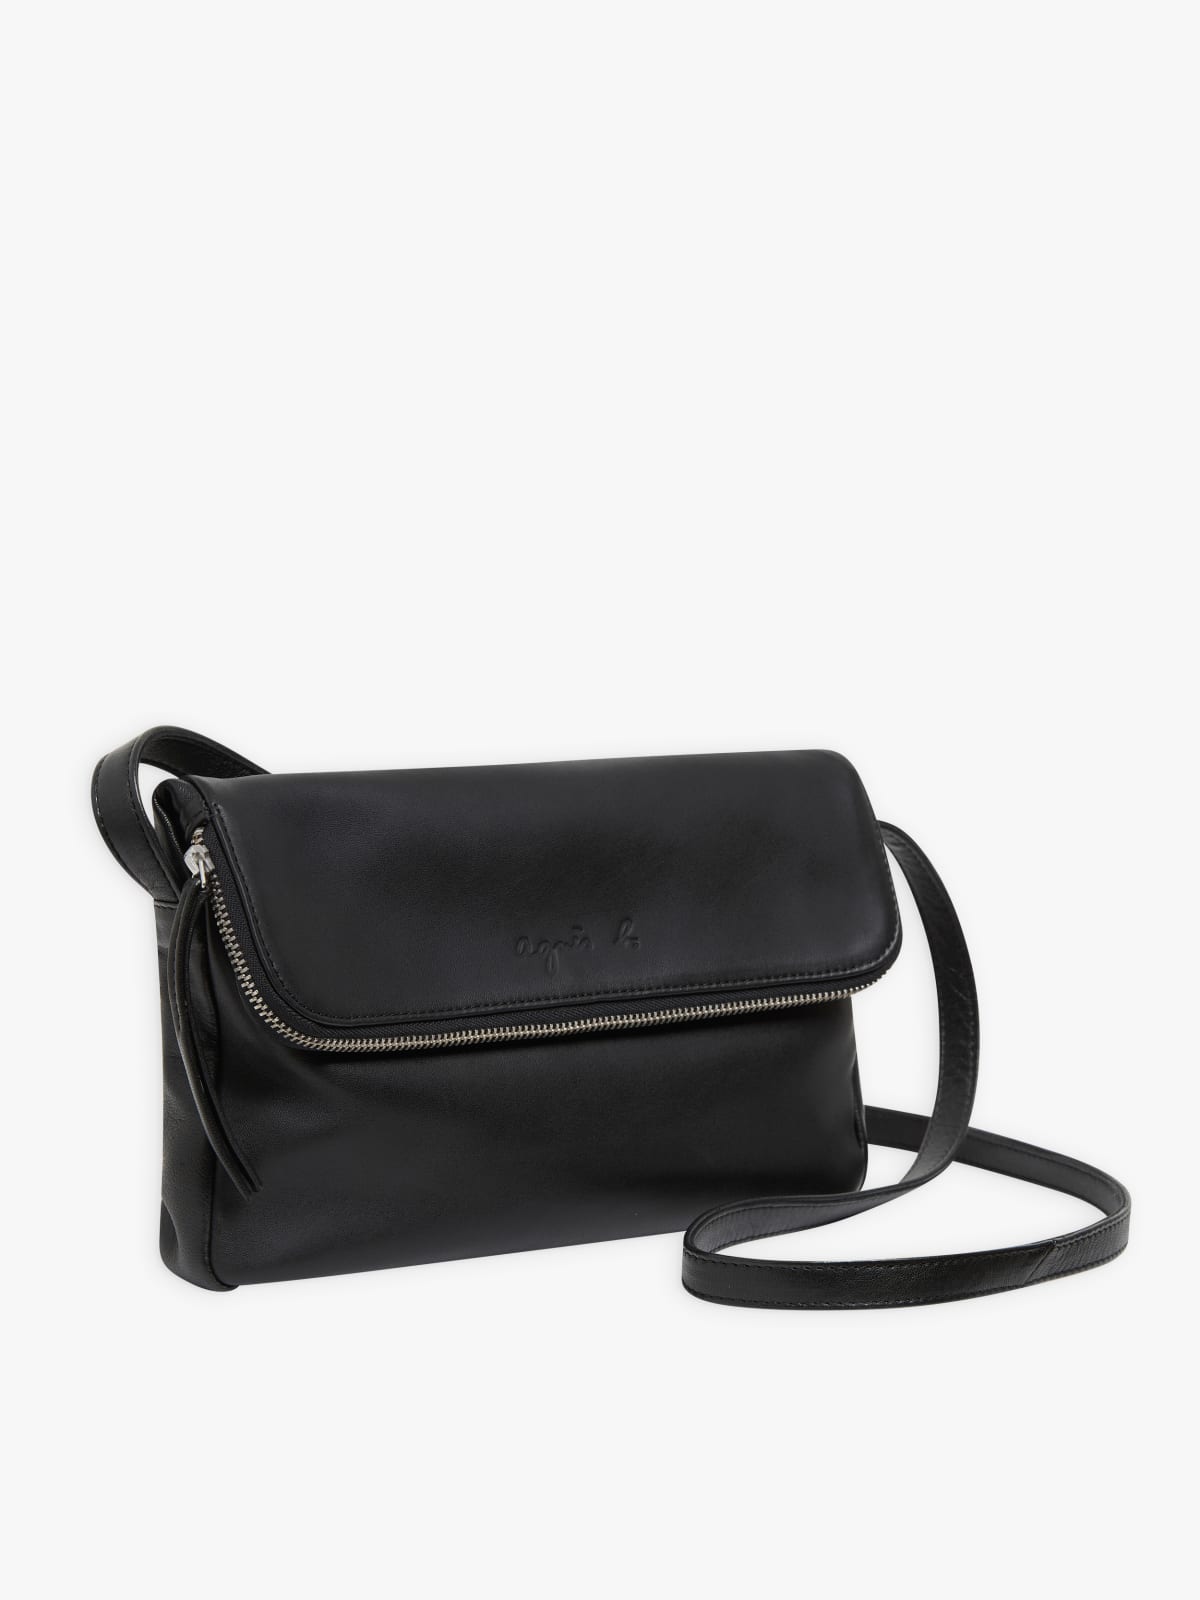 black leather Asya bag